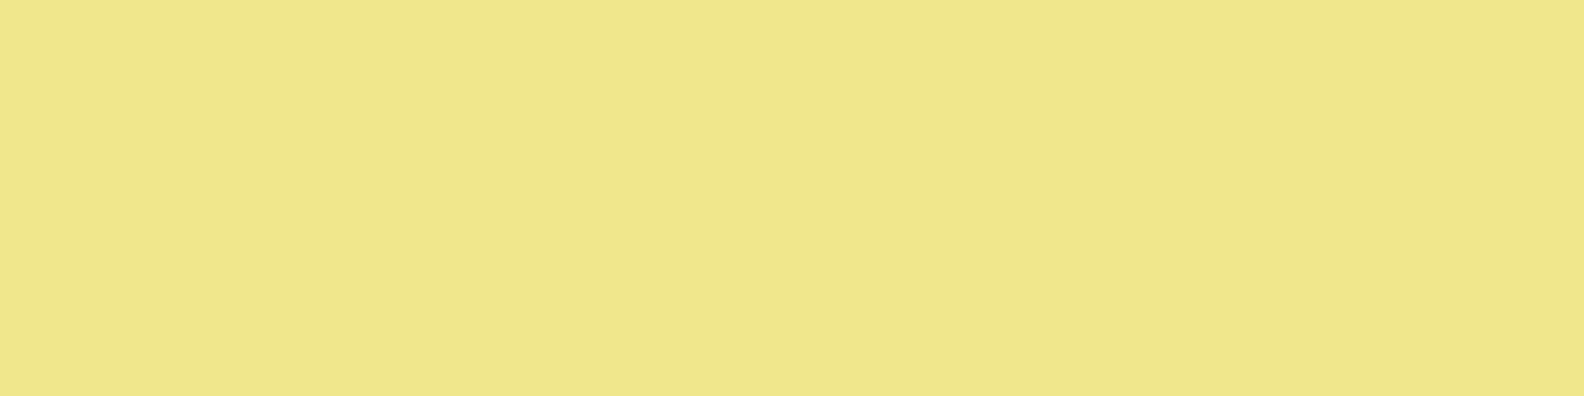 1584x396 Khaki X11 Gui Light Khaki Solid Color Background